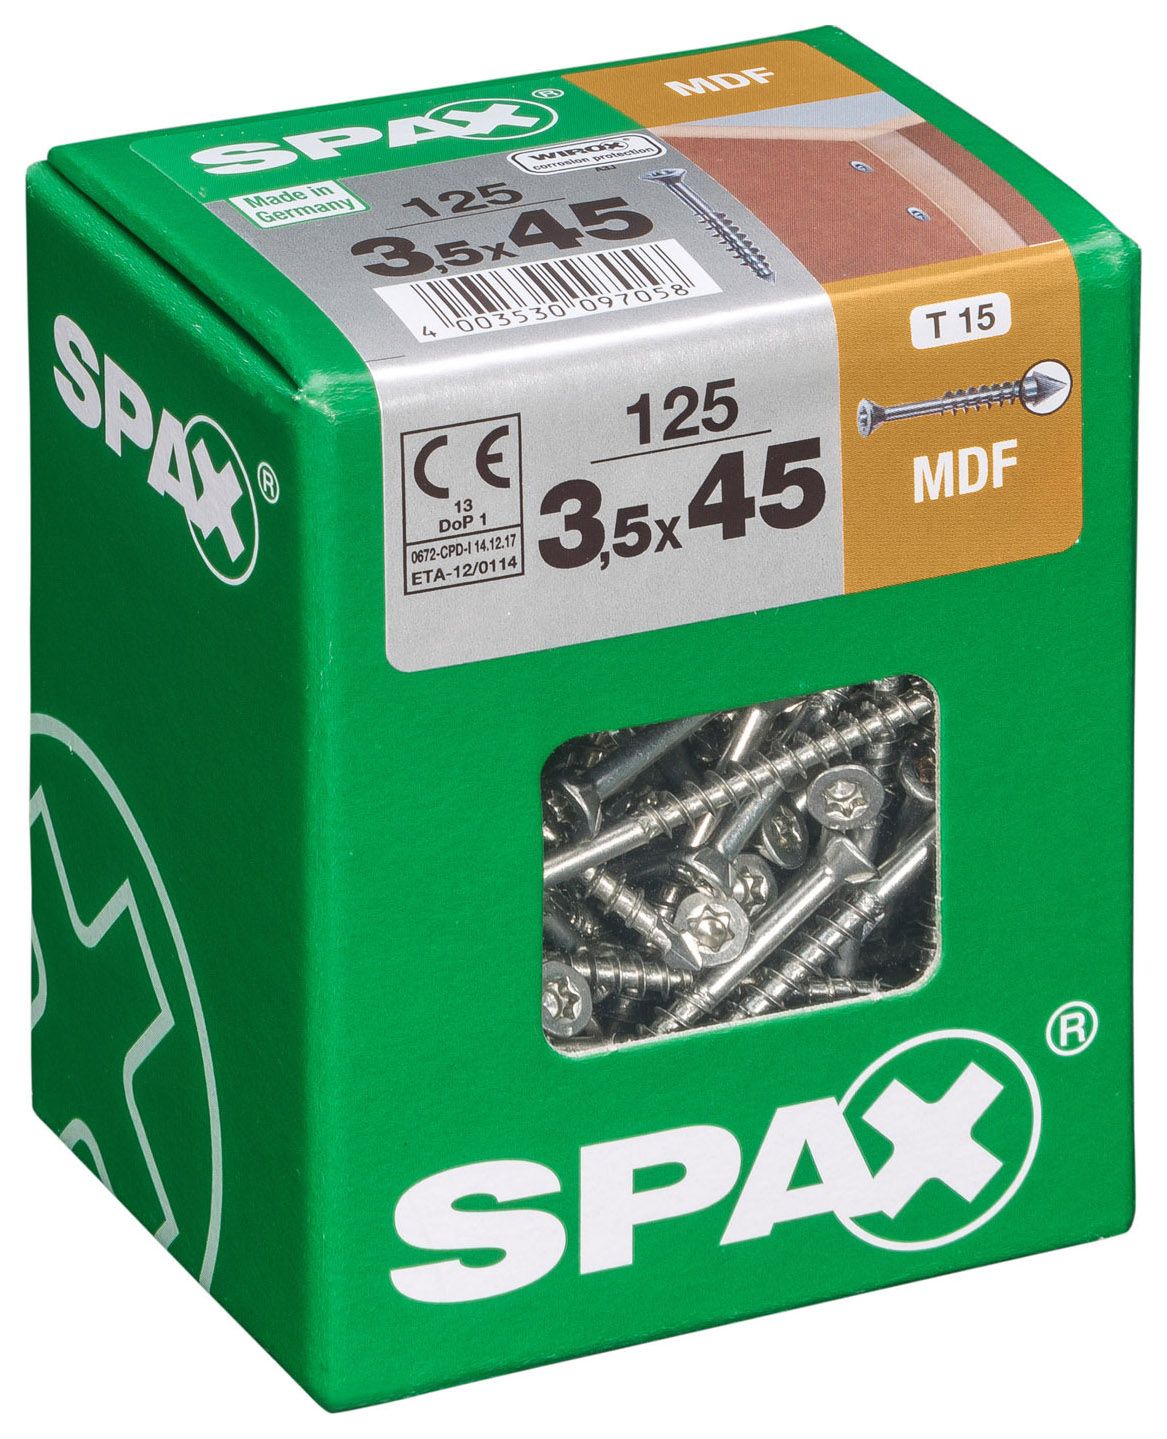 Image of Spax TX Countersunk Blue Zinc MDF Screws - 3.5 x 45mm Pack of 125